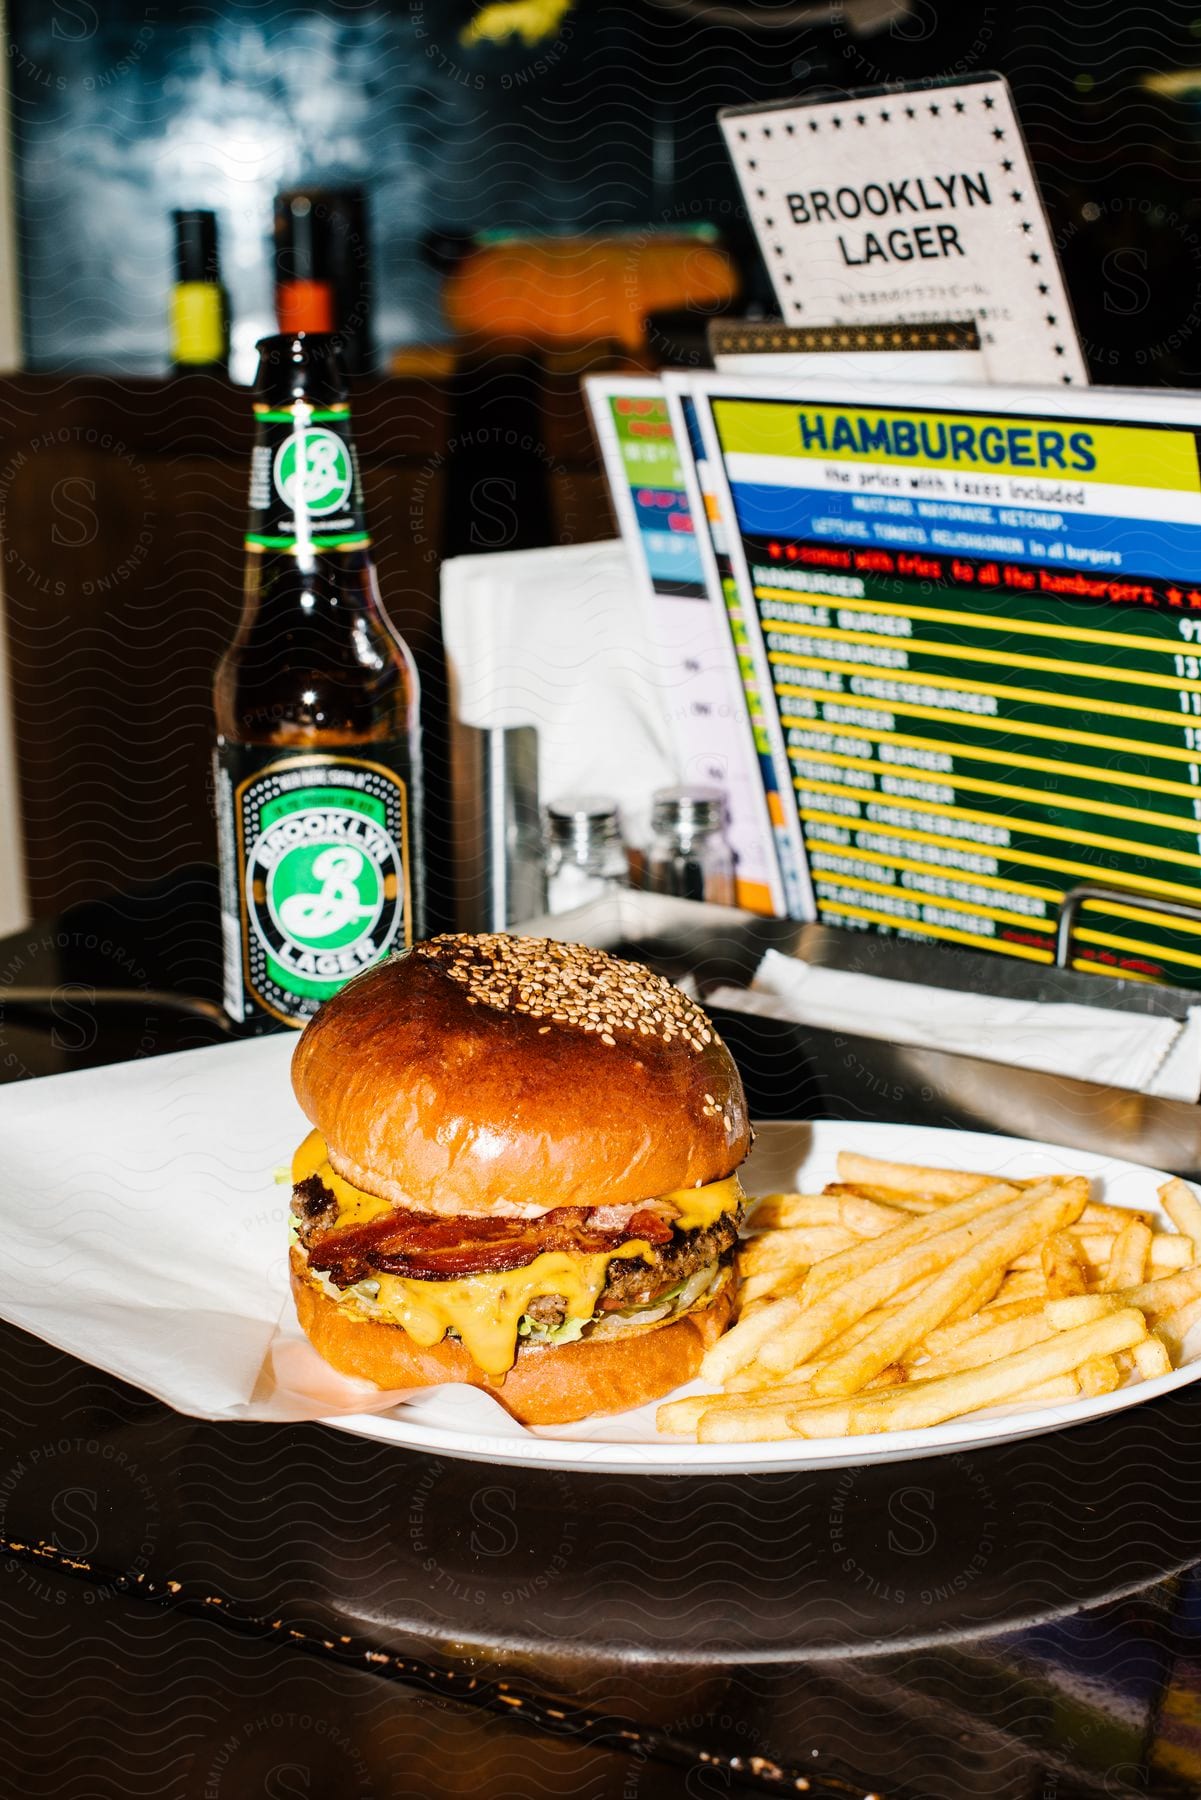 A hamburger, French fries and a beer at a restaurant.